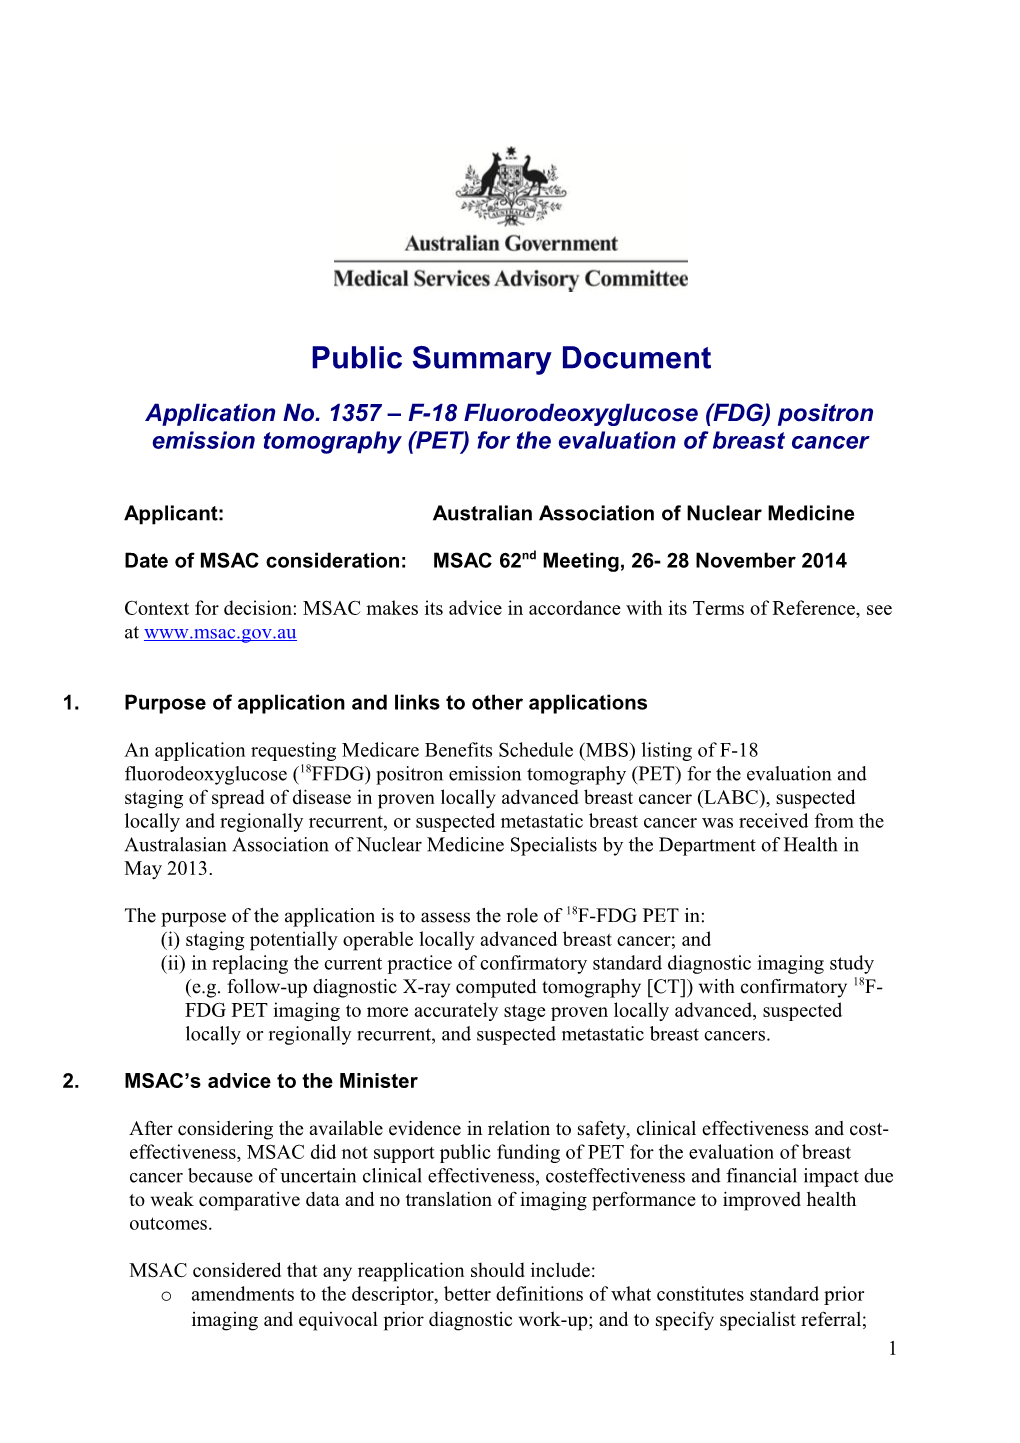 Applicant:Australian Association of Nuclear Medicine